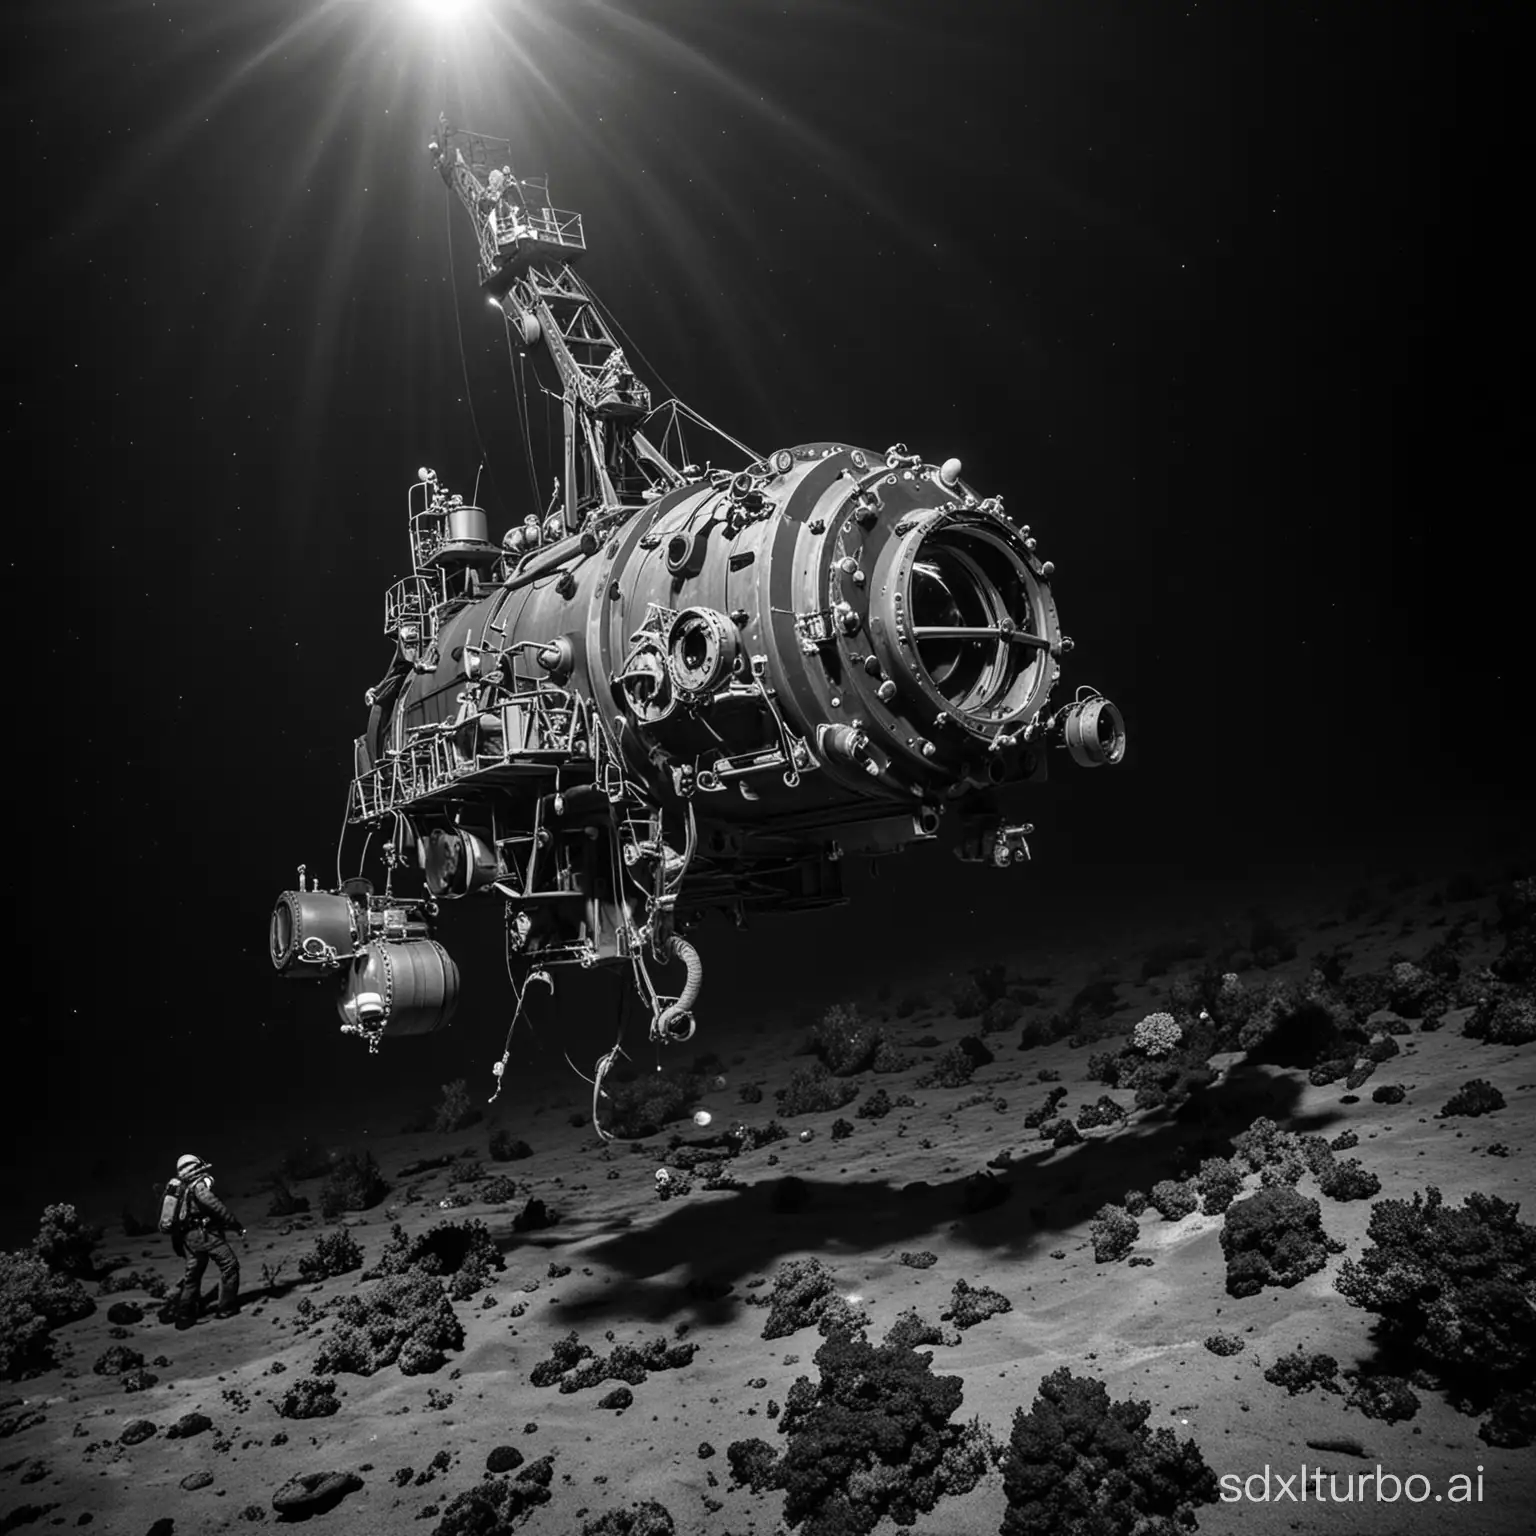 Deep sea exploration